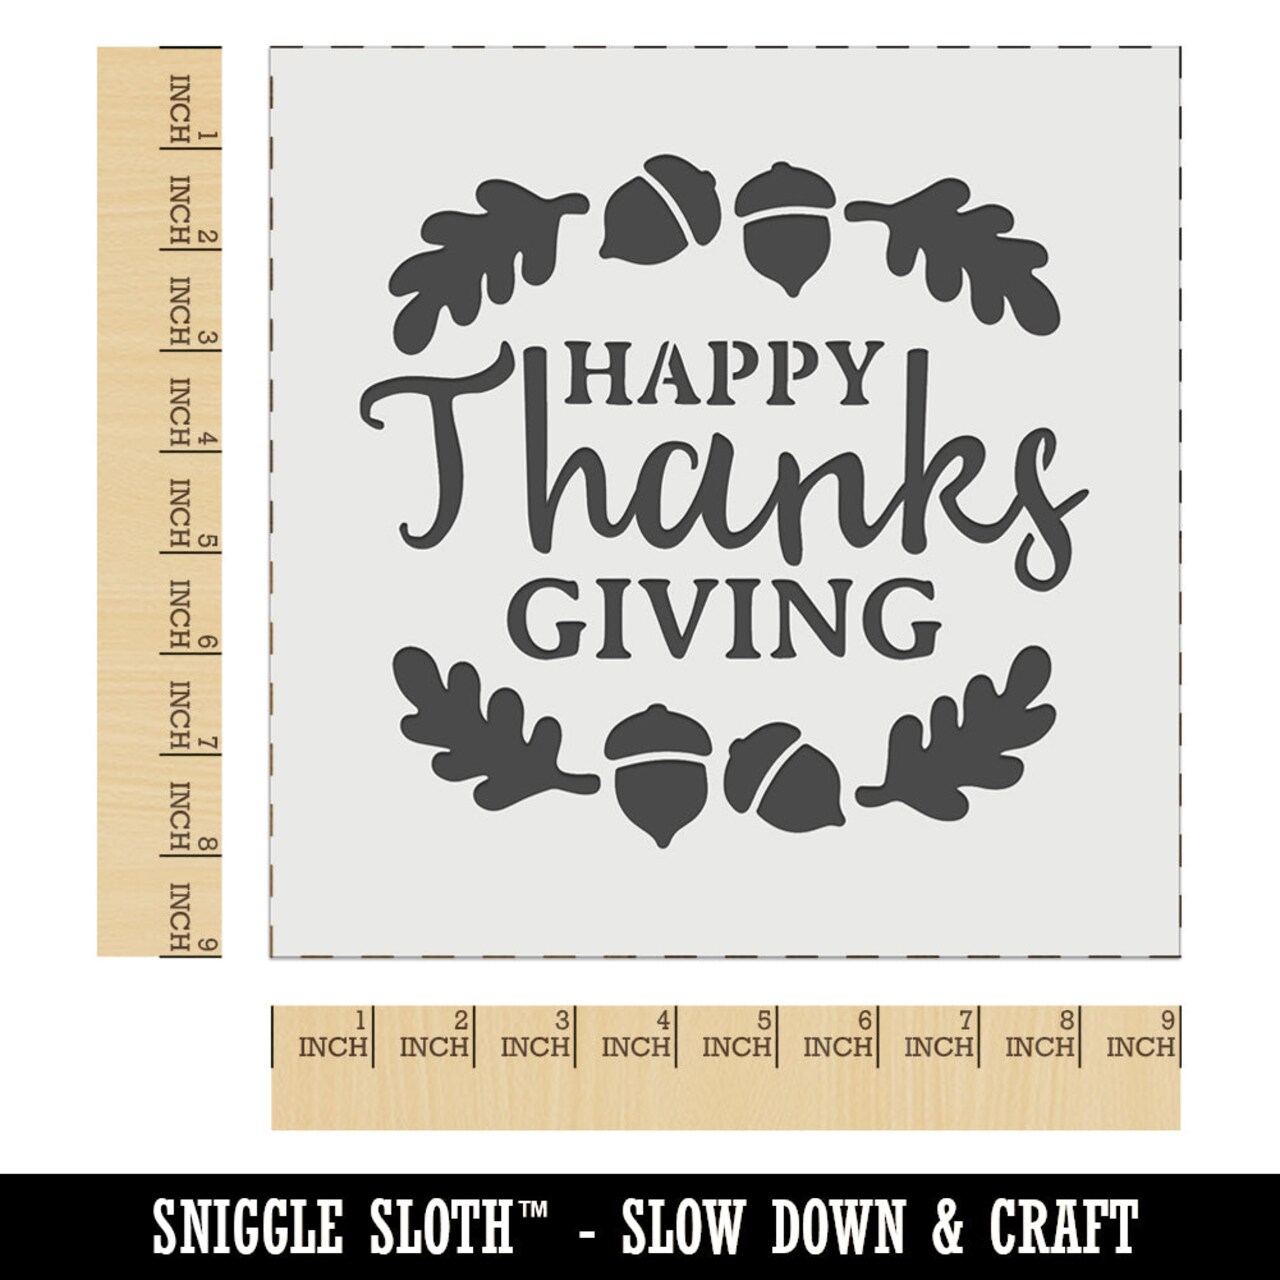 Happy Thanksgiving Oak Leaves Acorns Wall Cookie DIY Craft Reusable Stencil